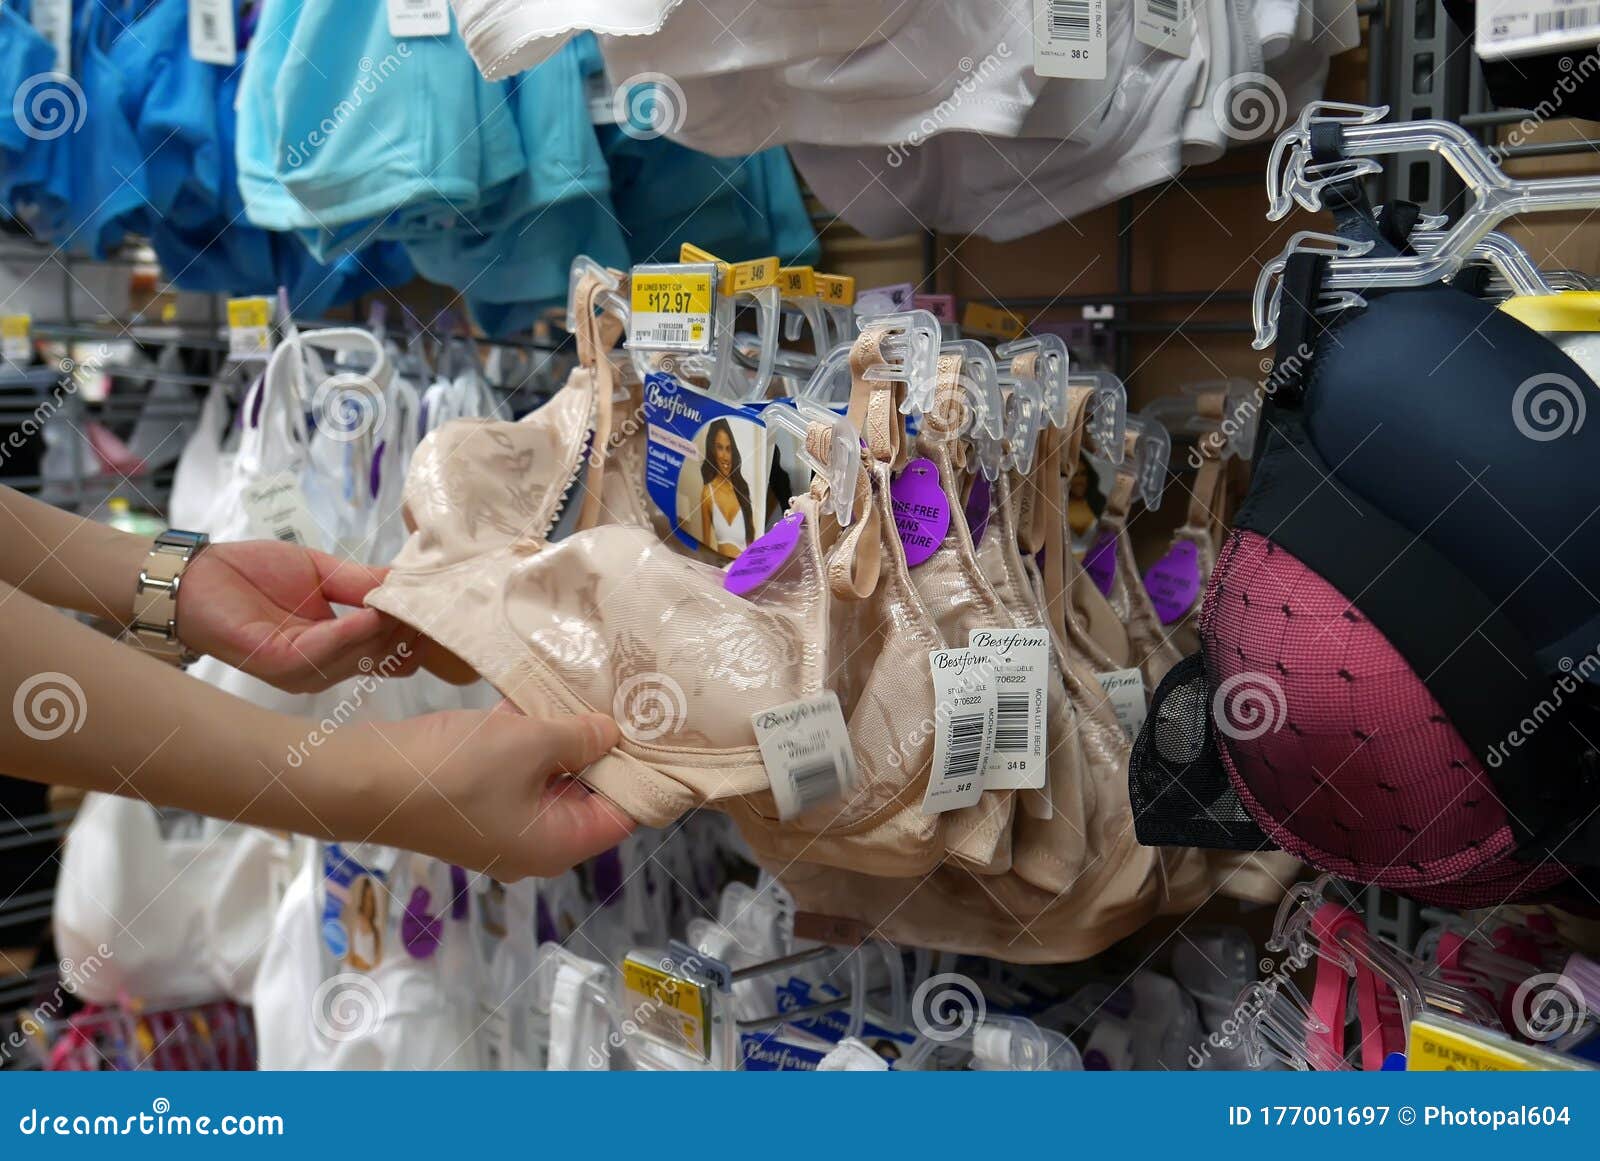 Woman Buying Bra Inside Walmart Store Editorial Photography